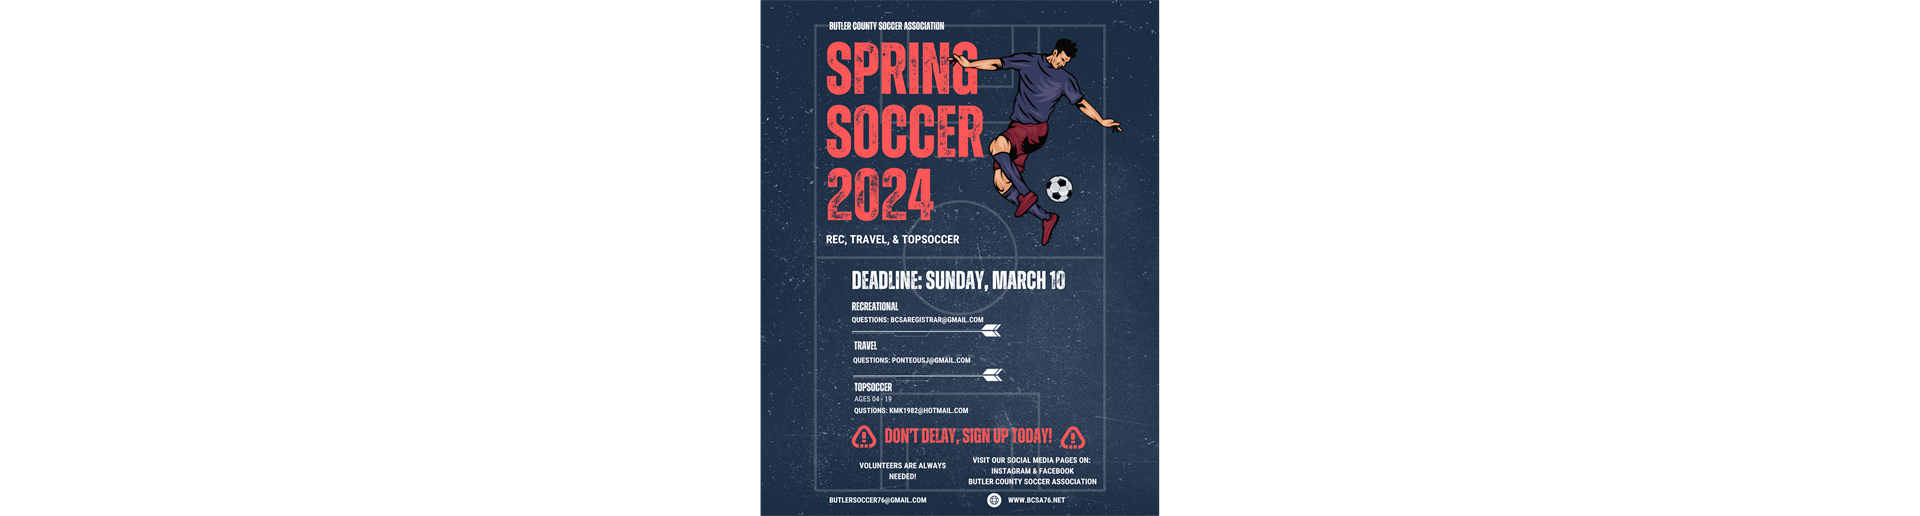 Spring 2024 Registration is OPEN!